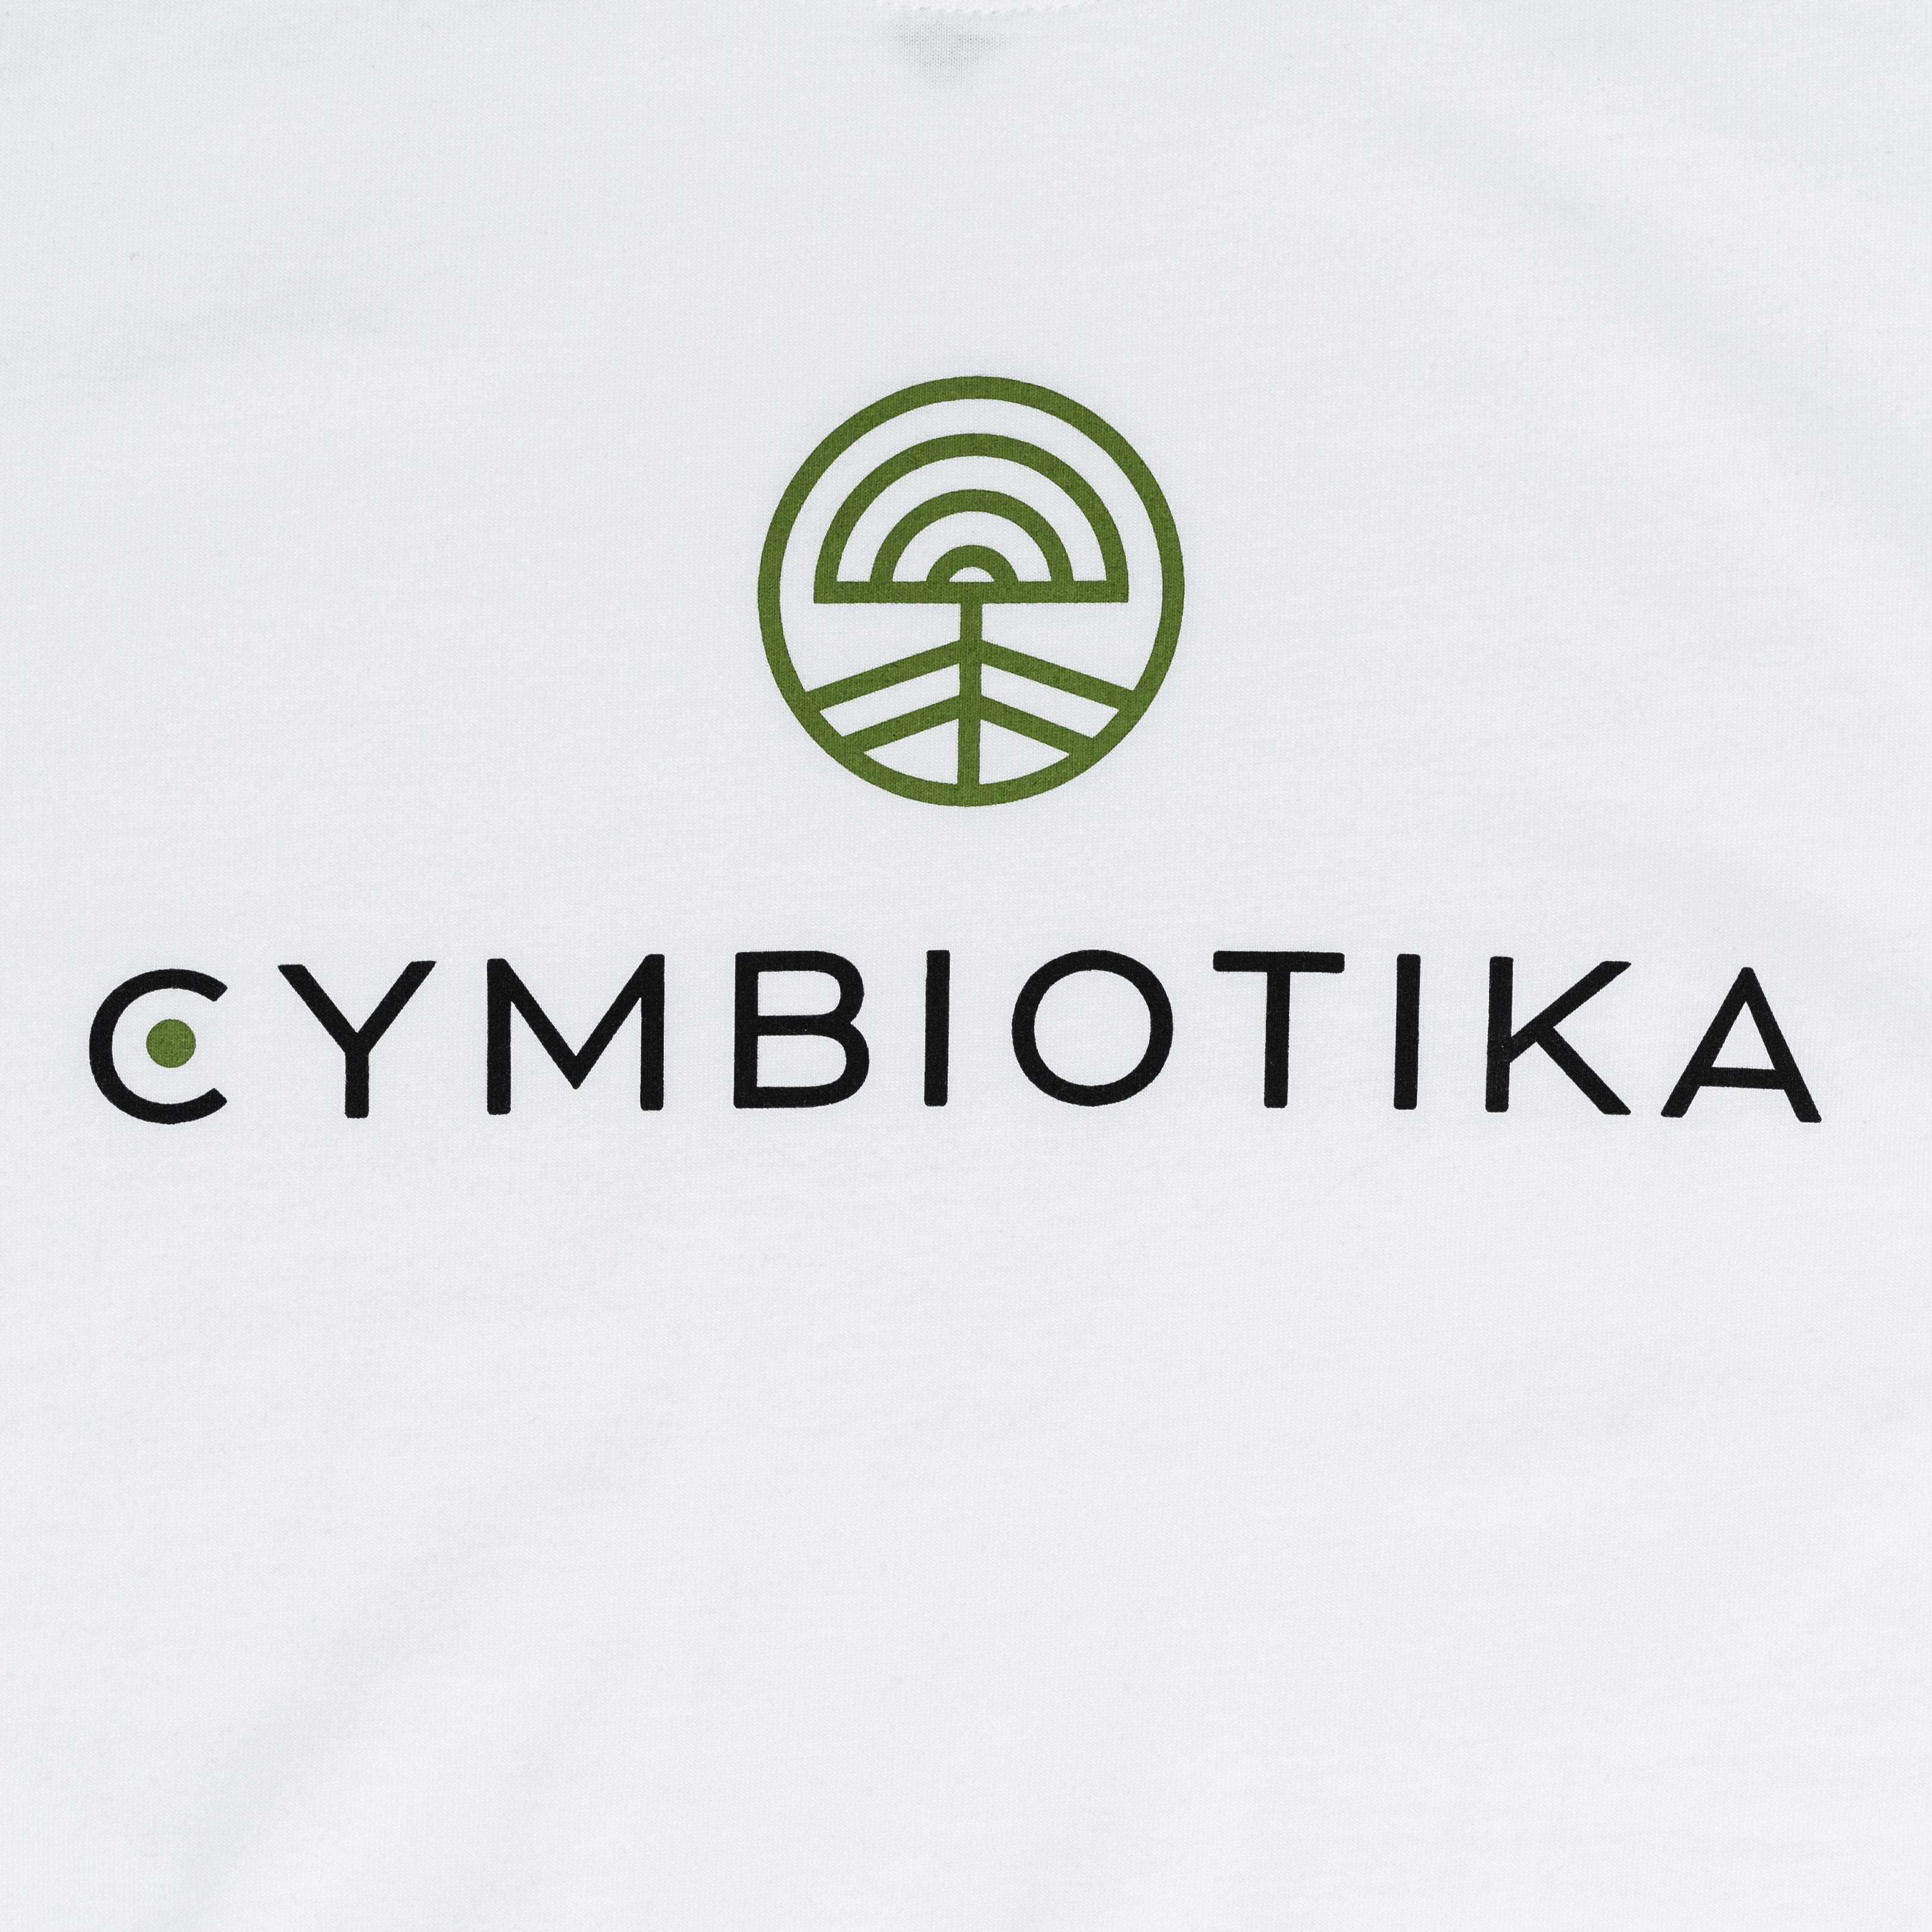 Cymbiotika Classic Logo T-Shirt White Detail